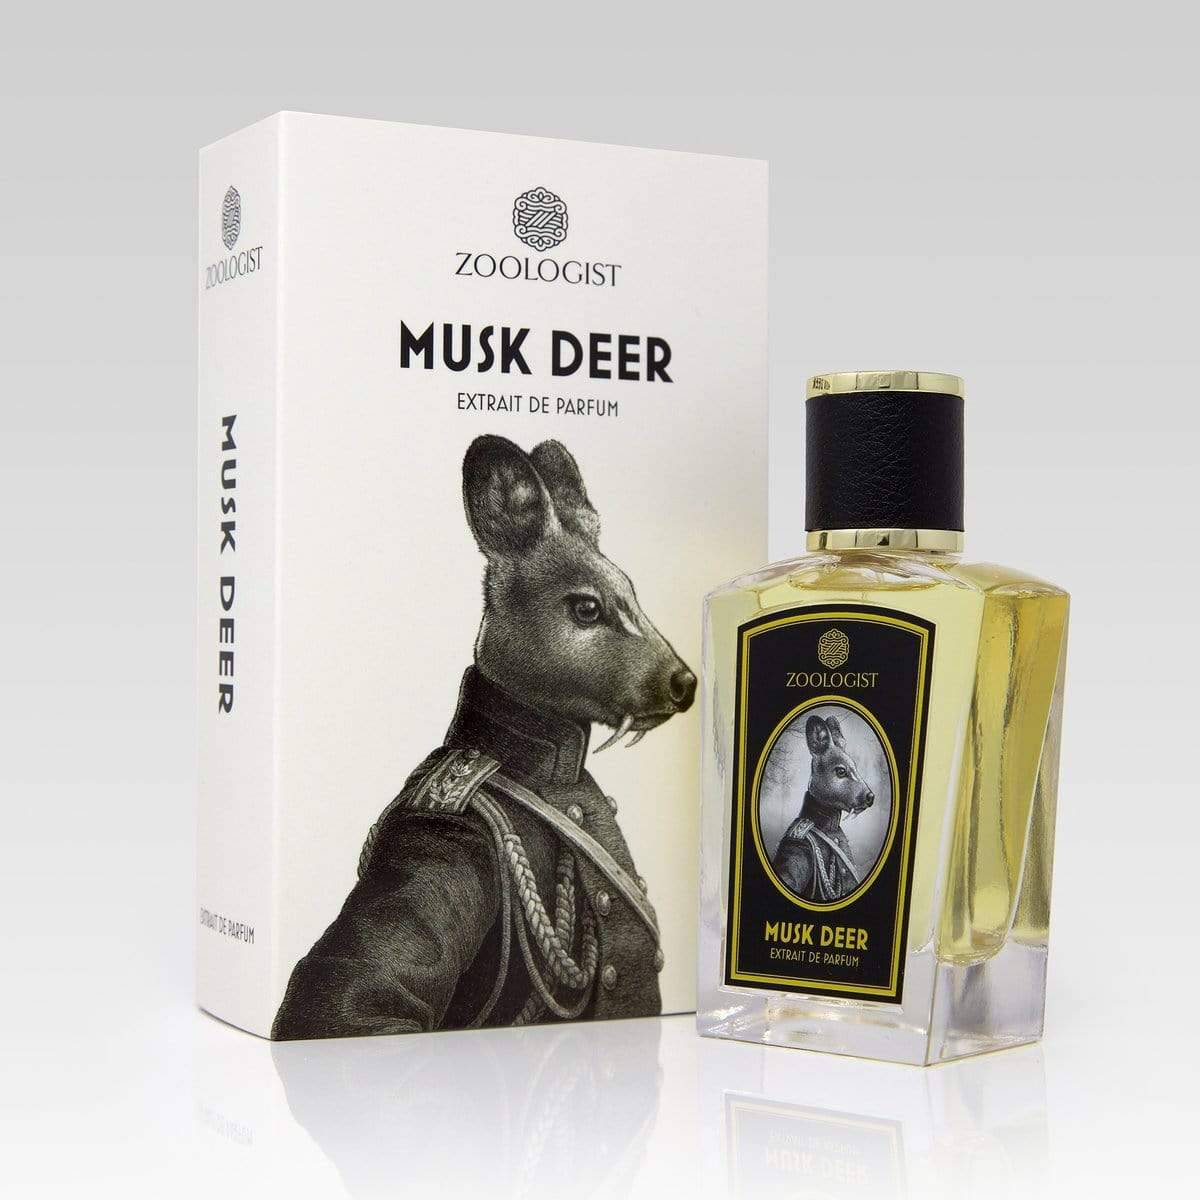  Musk Deer Deluxe Bottle Zoologist Perfumarie